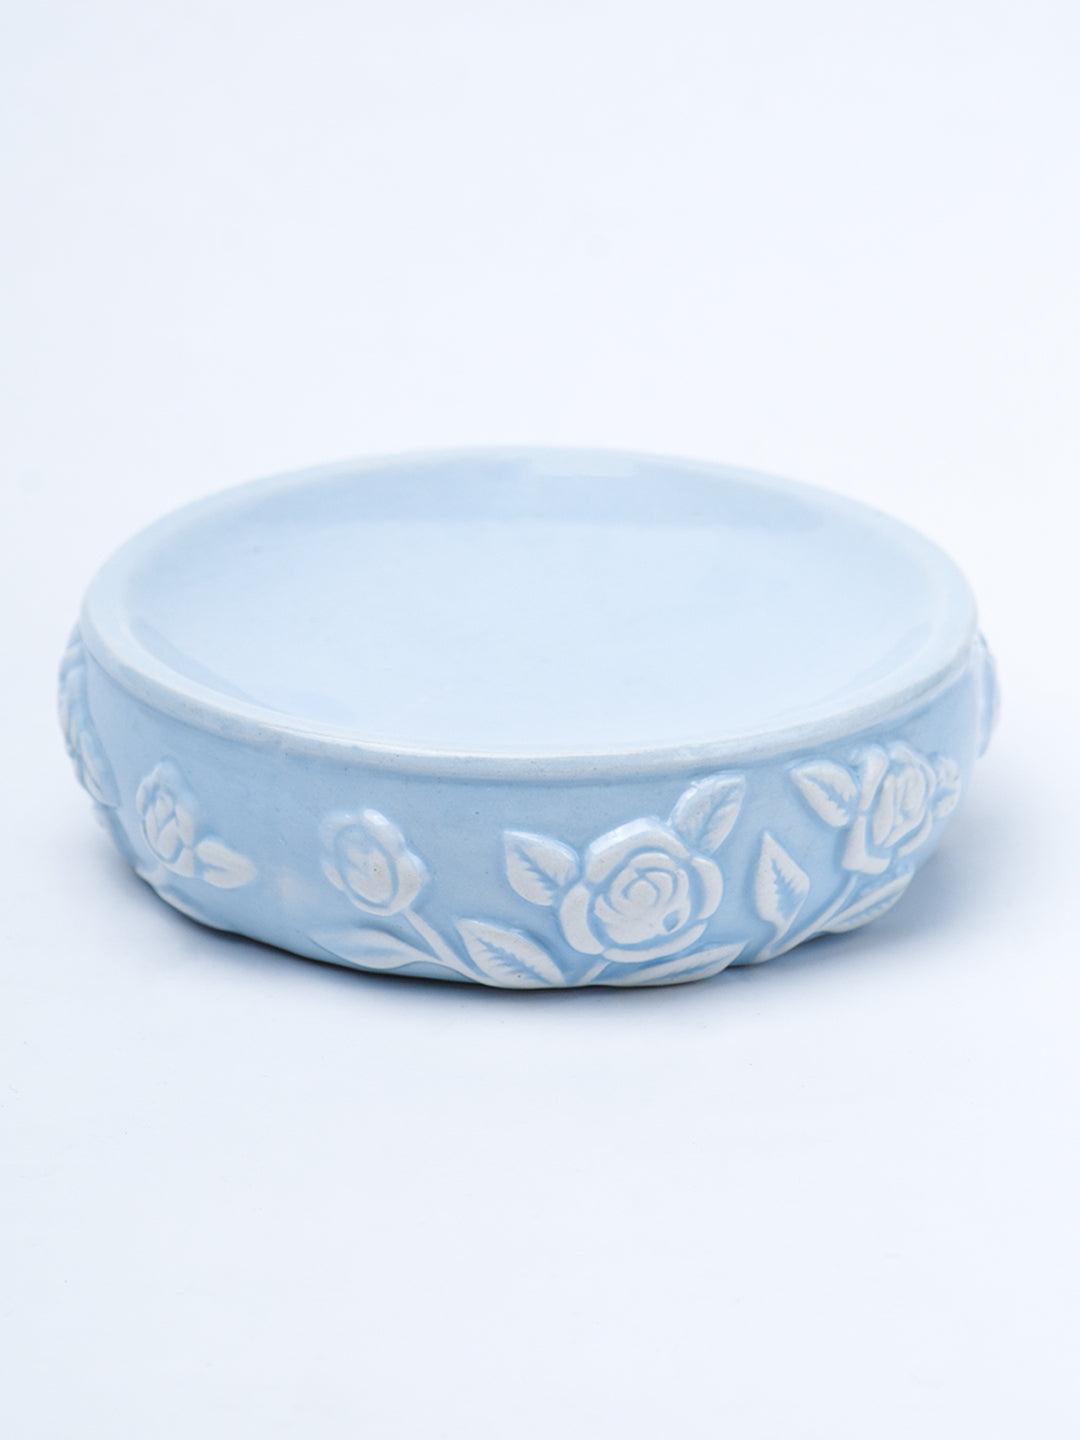 Blue Ceramic Bathroom Set Of 4 - Floral Design, Bath Accessories - 6